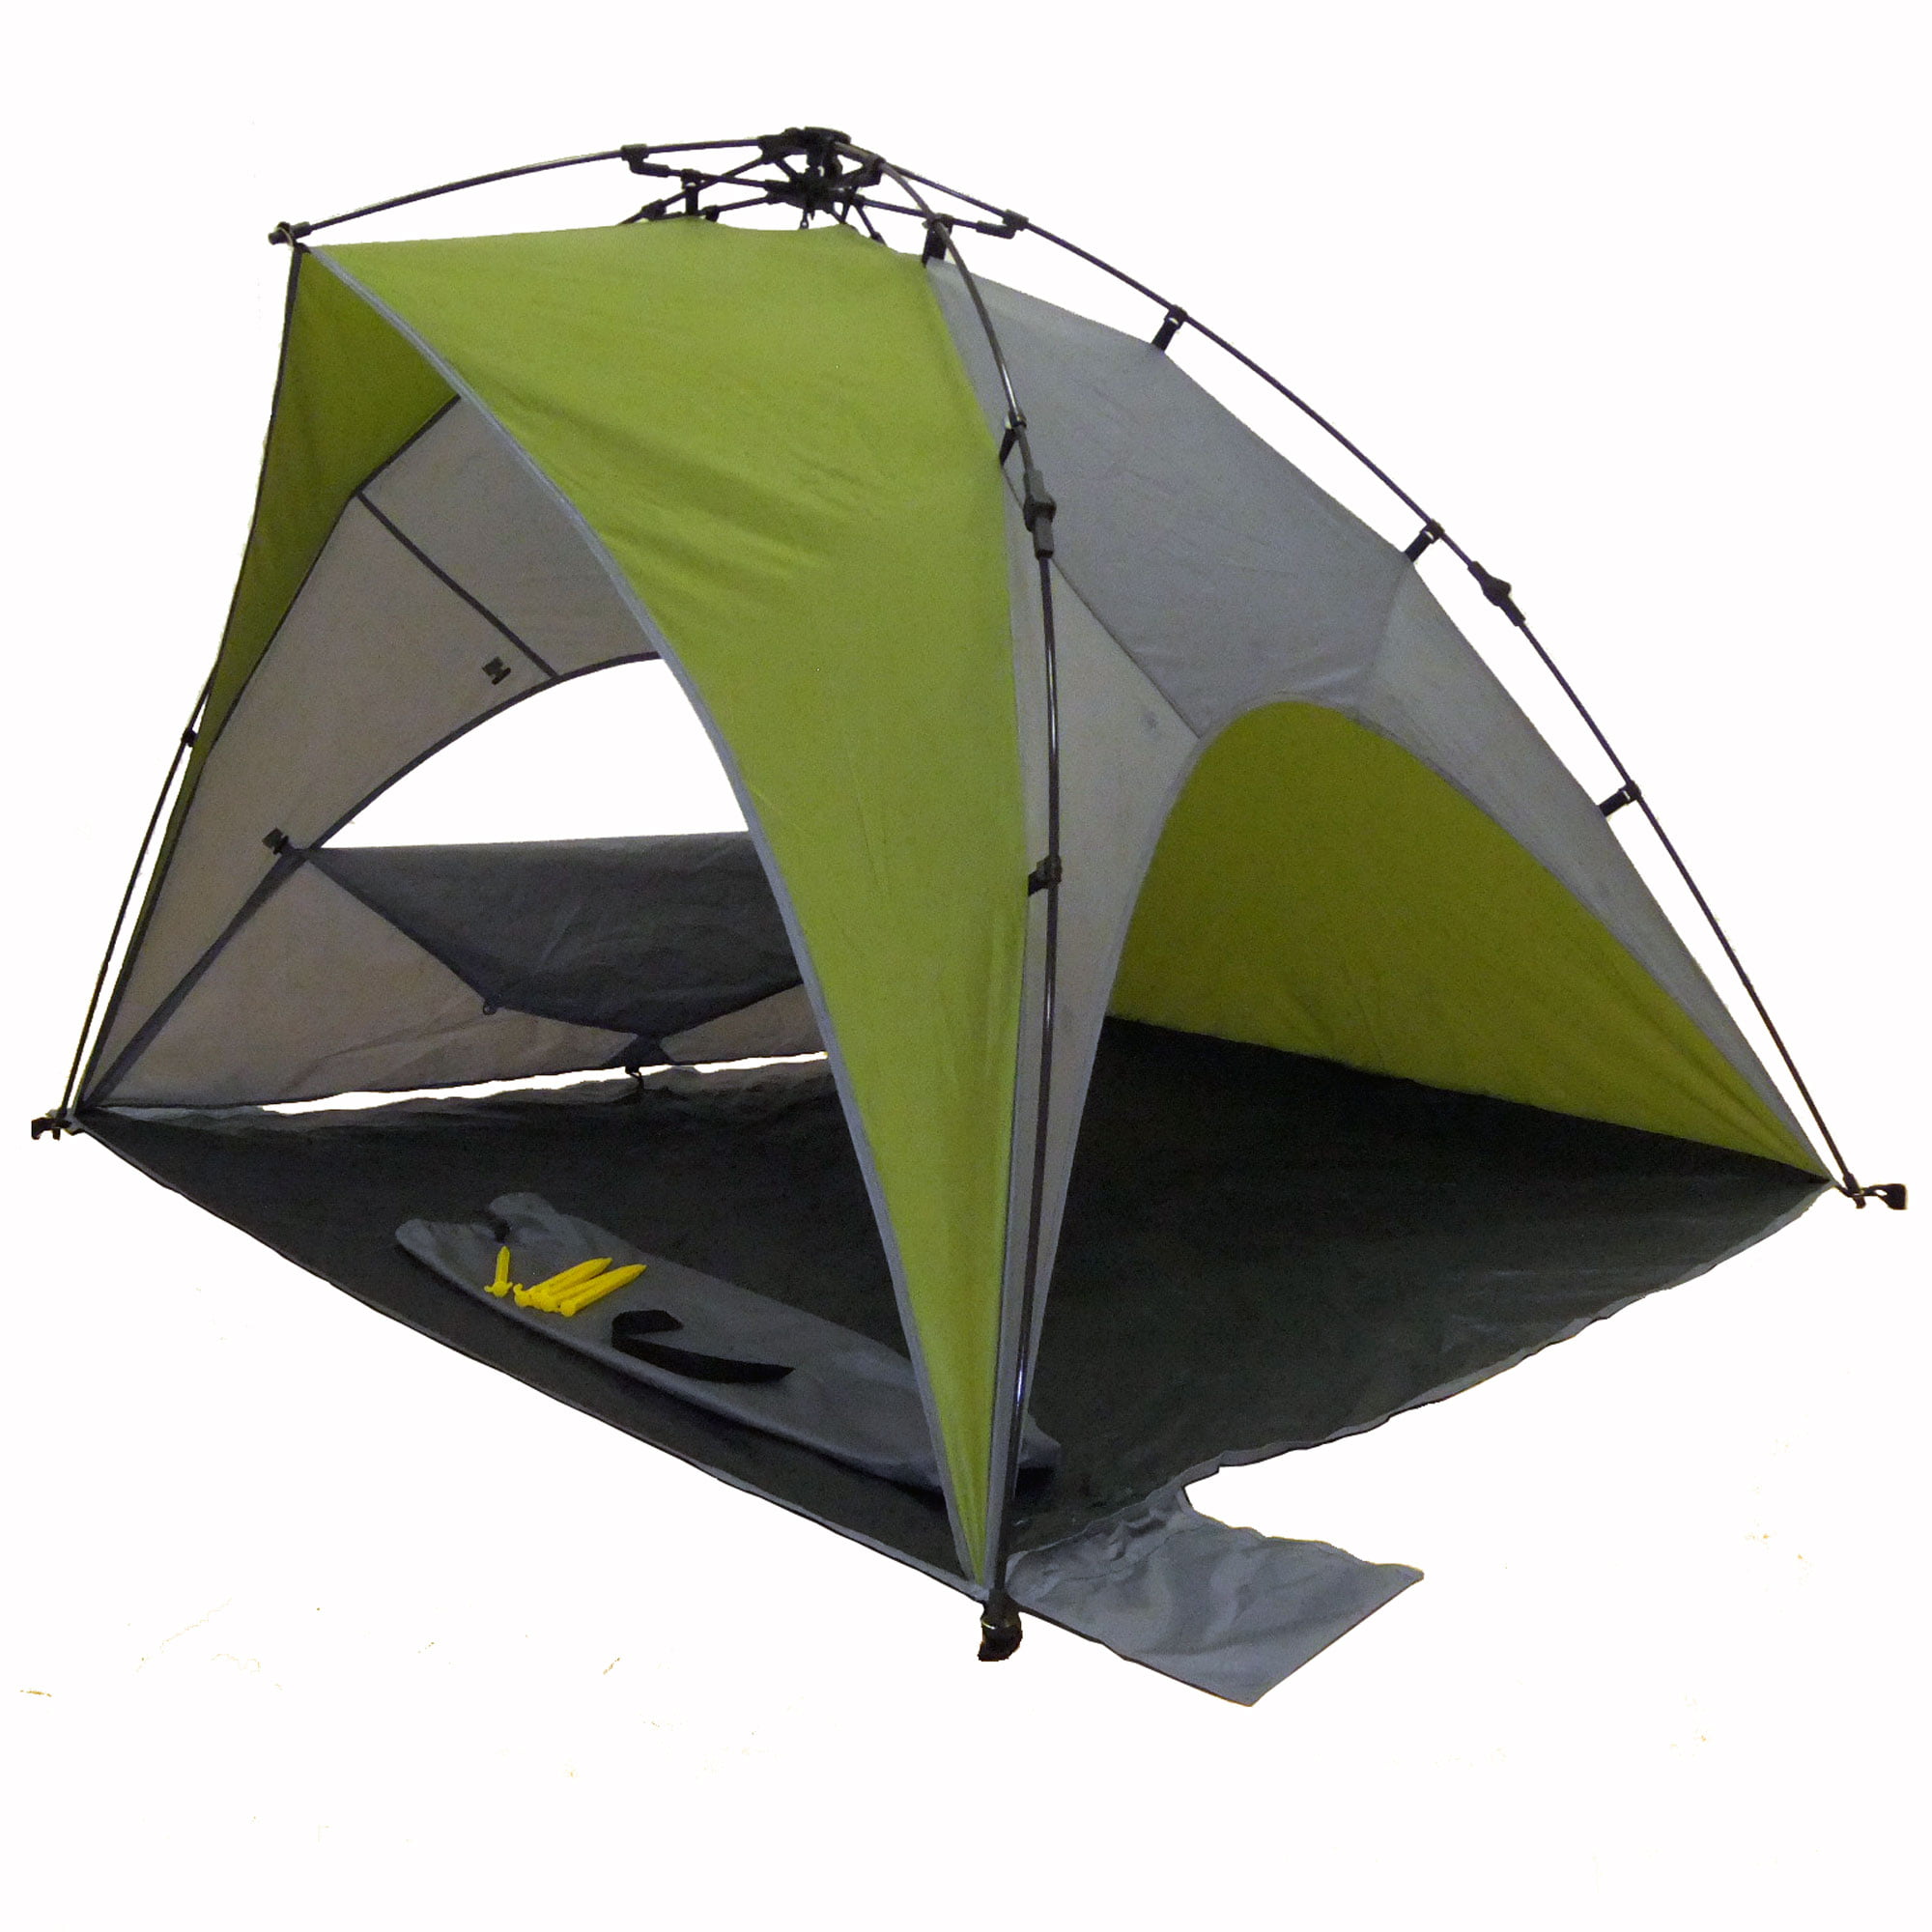 Genji Sports Instant Camping Tent